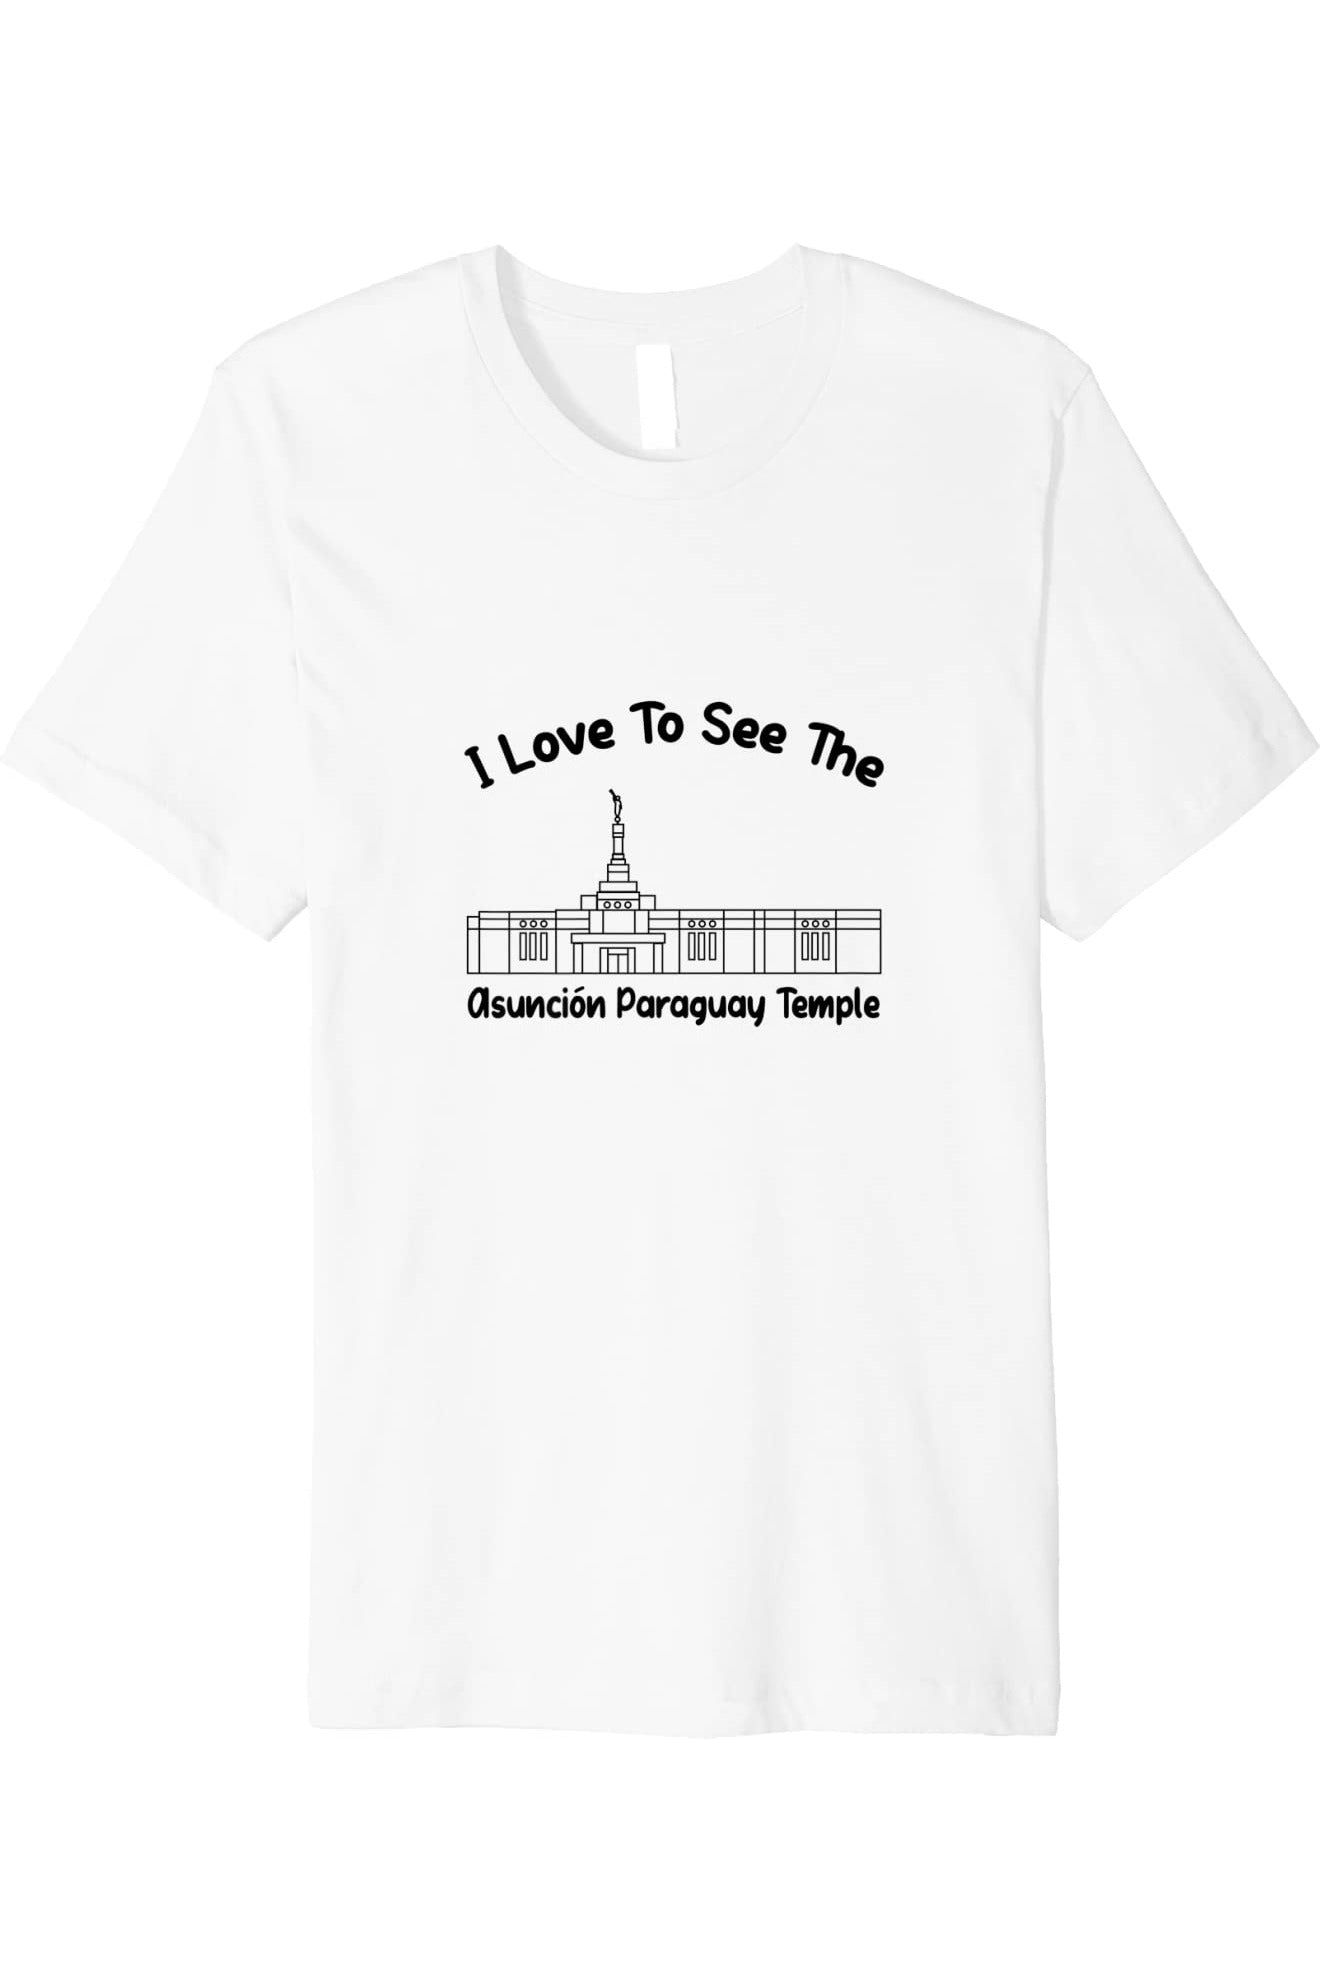 Asuncion Paraguay Temple T-Shirt - Premium - Primary Style (English) US